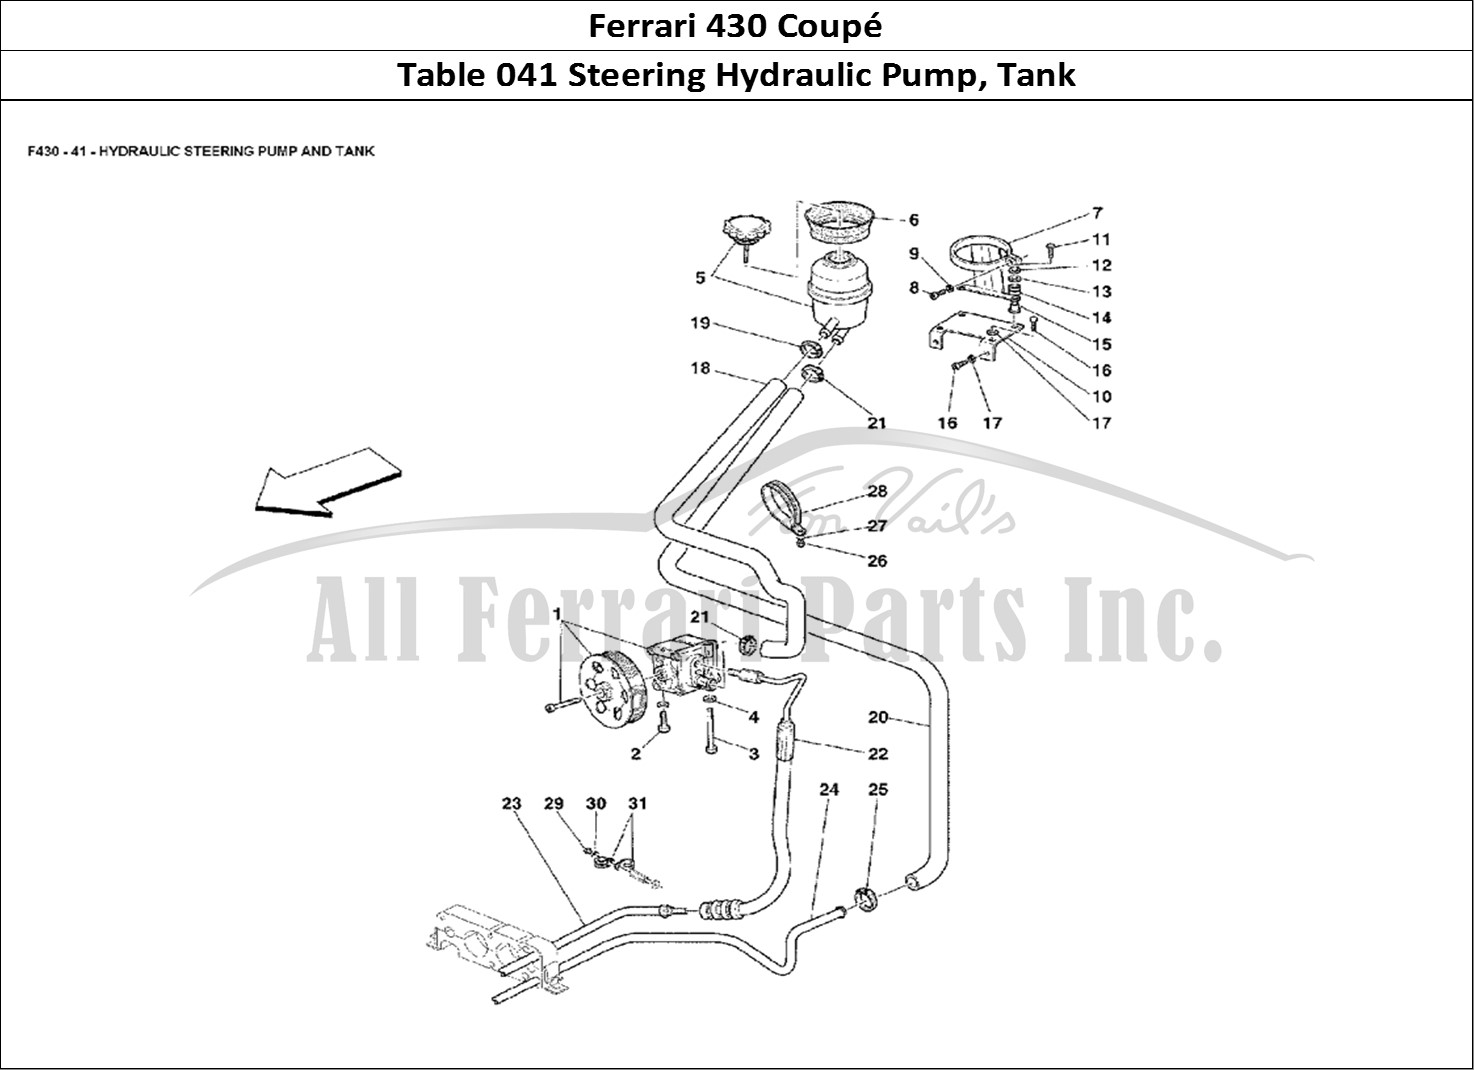 Ferrari Parts Ferrari 430 Coup Page 041 Hydraulic Steering Pump a